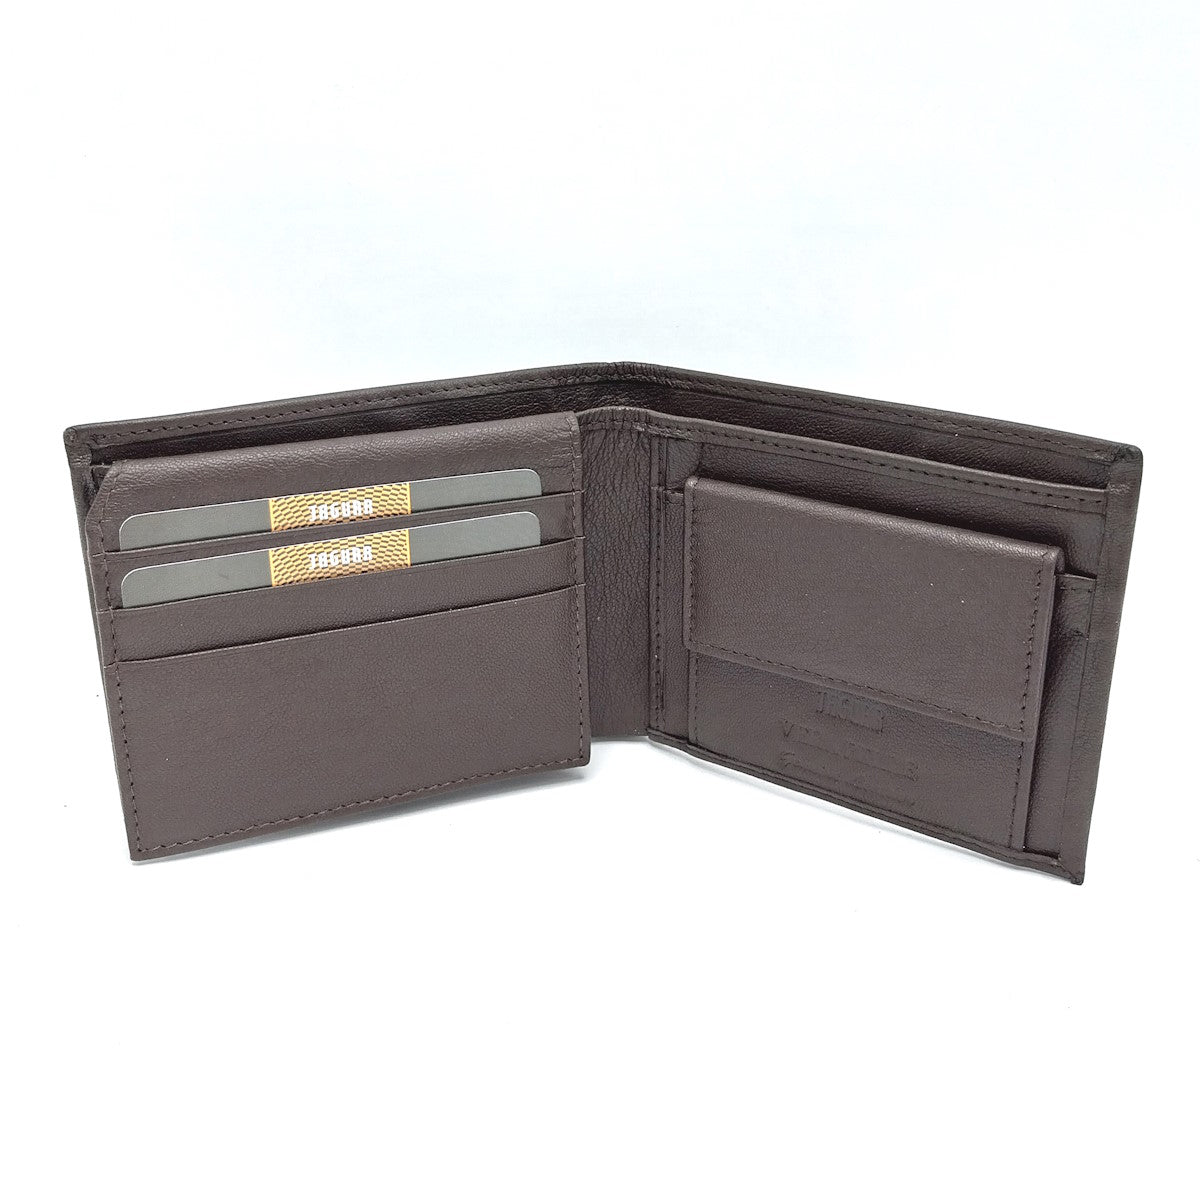 Genuine leather wallet, Jaguar, art. PF803-9